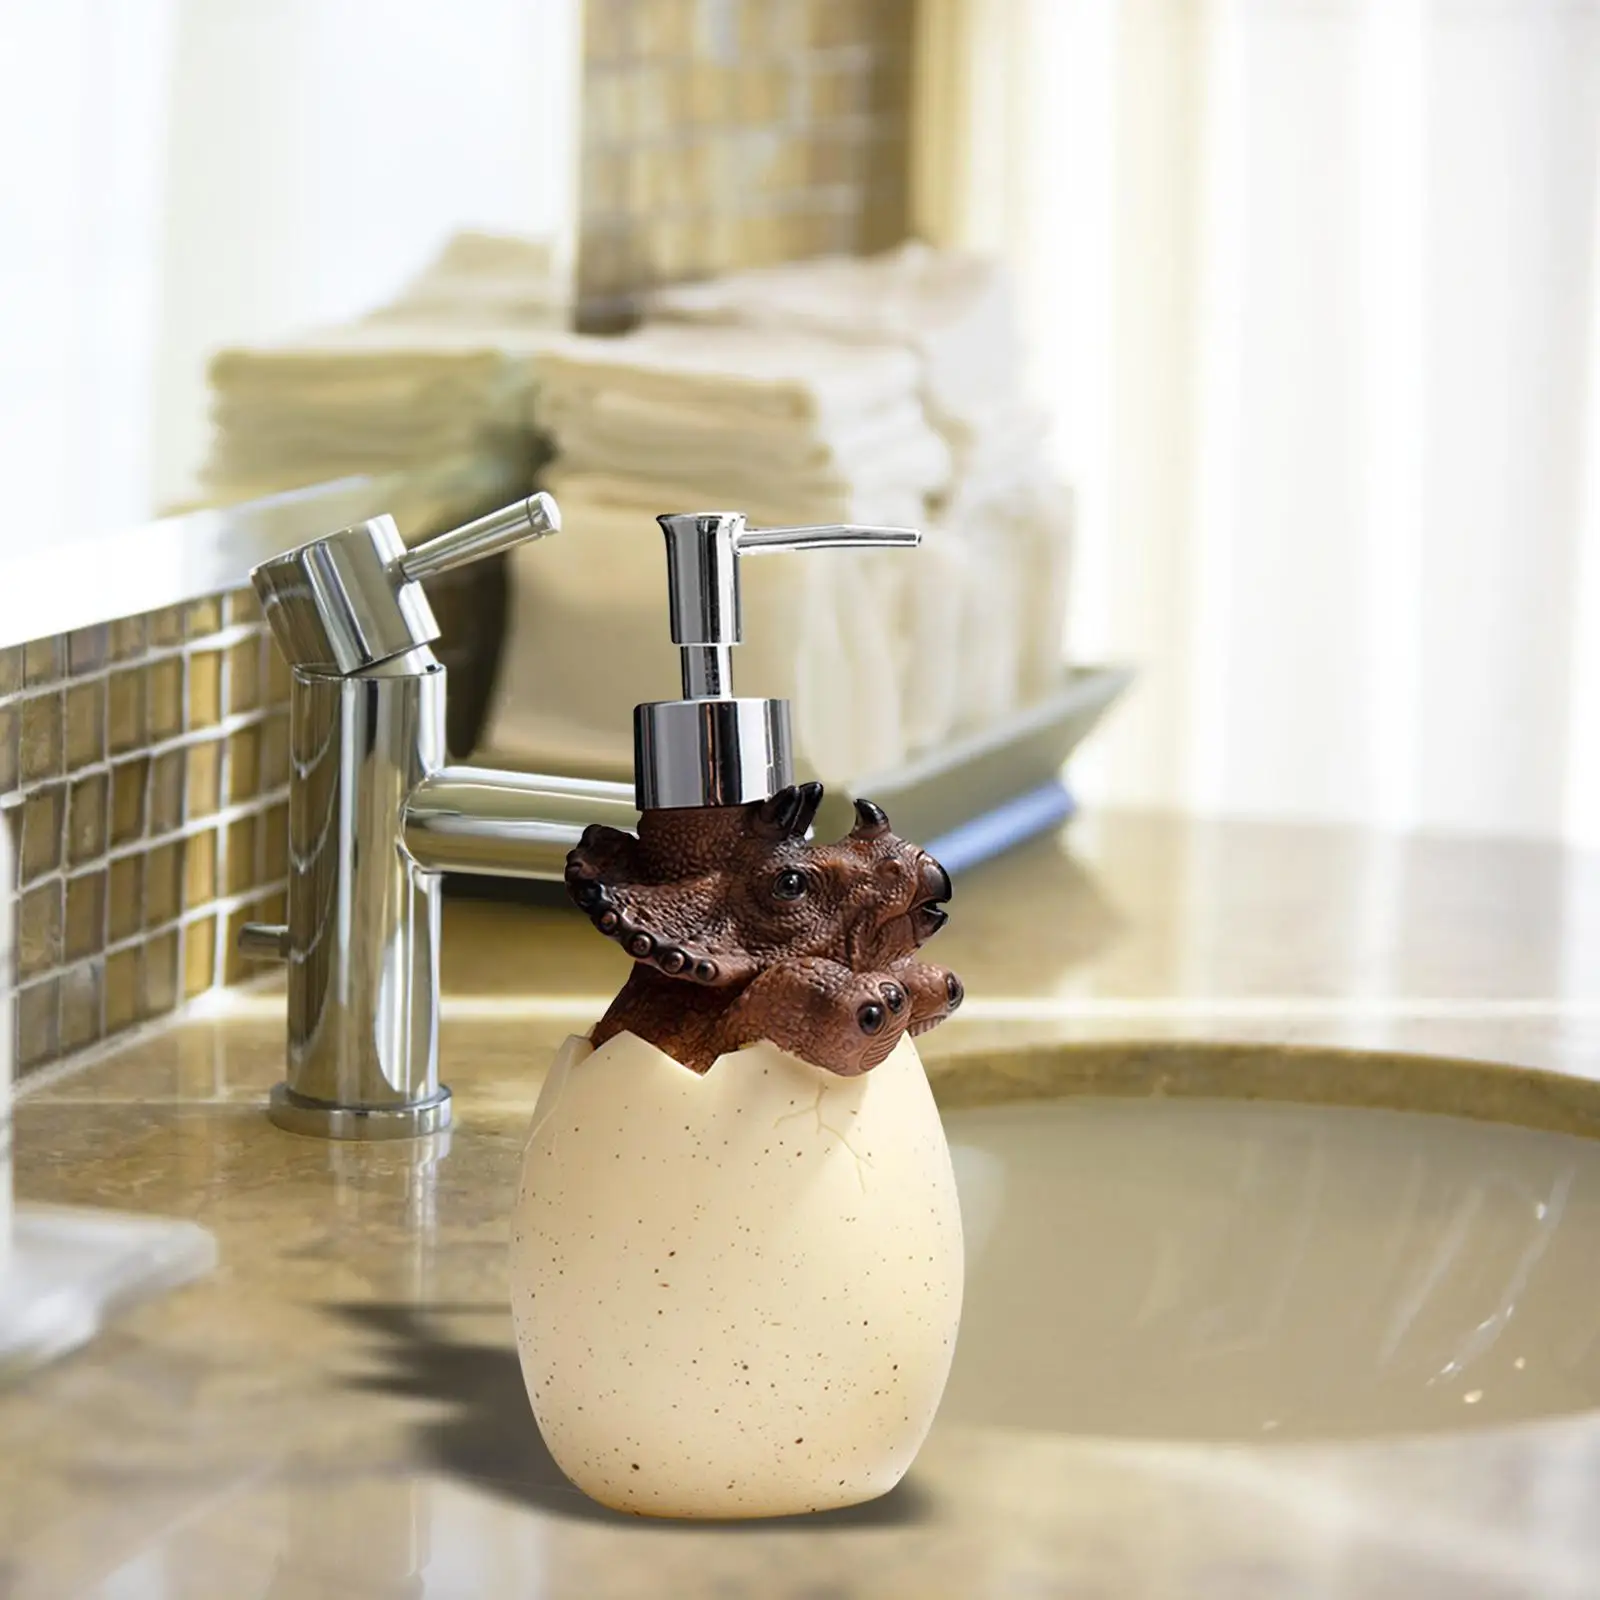 Cute Animal Soap Dispenser 560ml Container Bath Accessory for Decoration